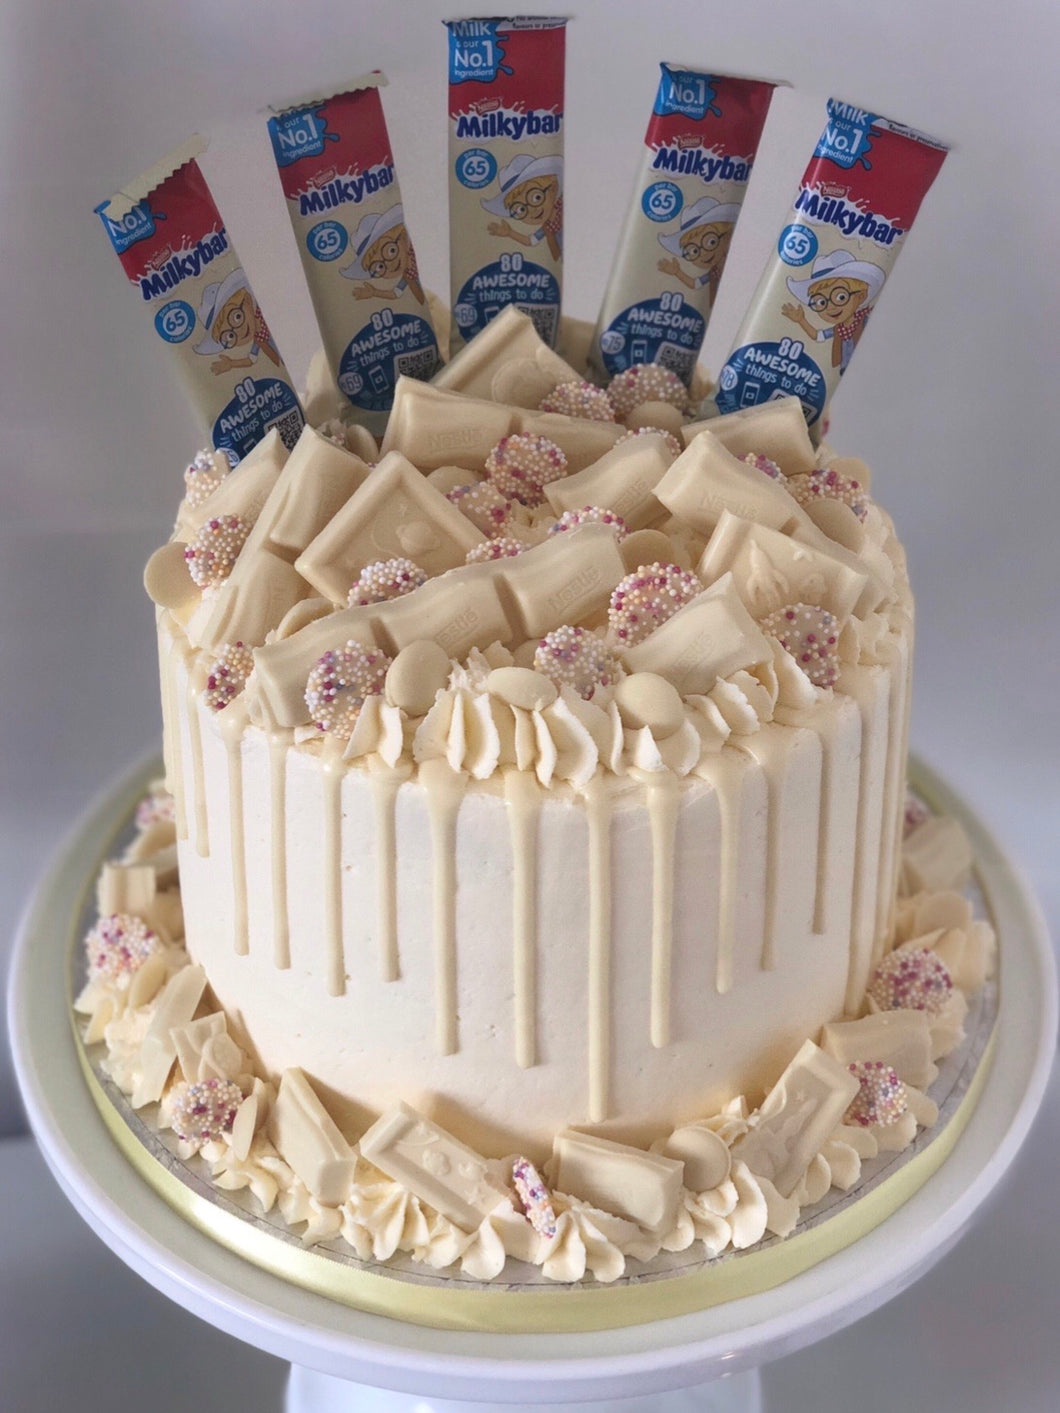 Milkybar drip cake